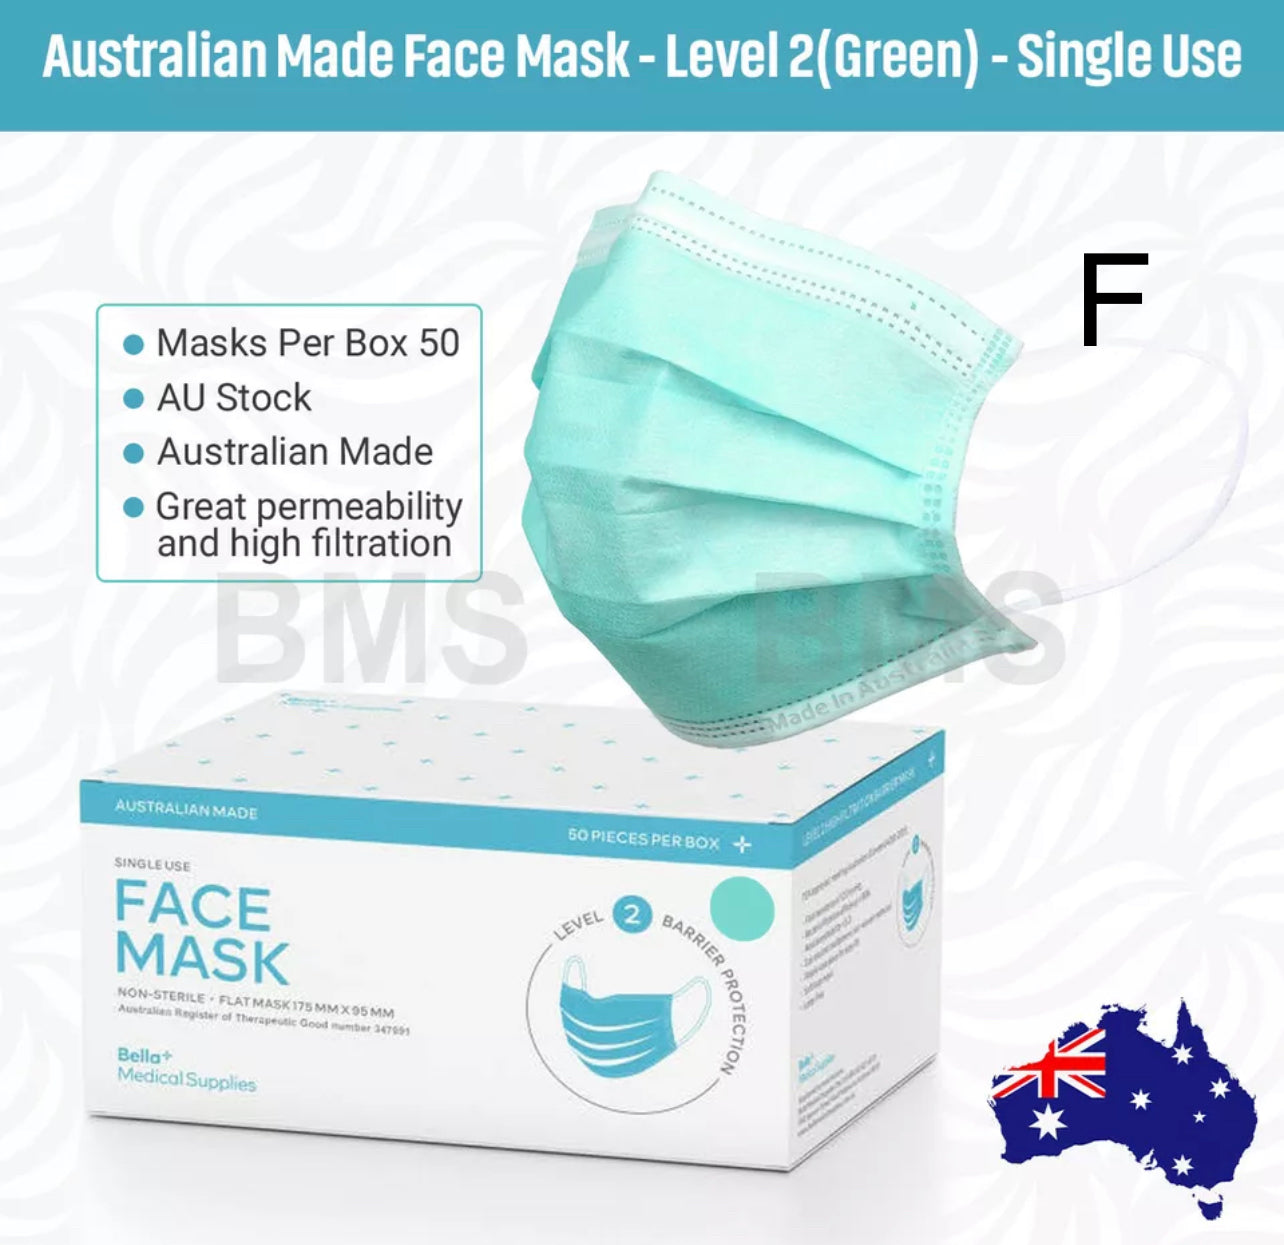 Bella Medical Australian Made Coloured Face Mask - Level 2 BUY 1 GET 1 FREE,